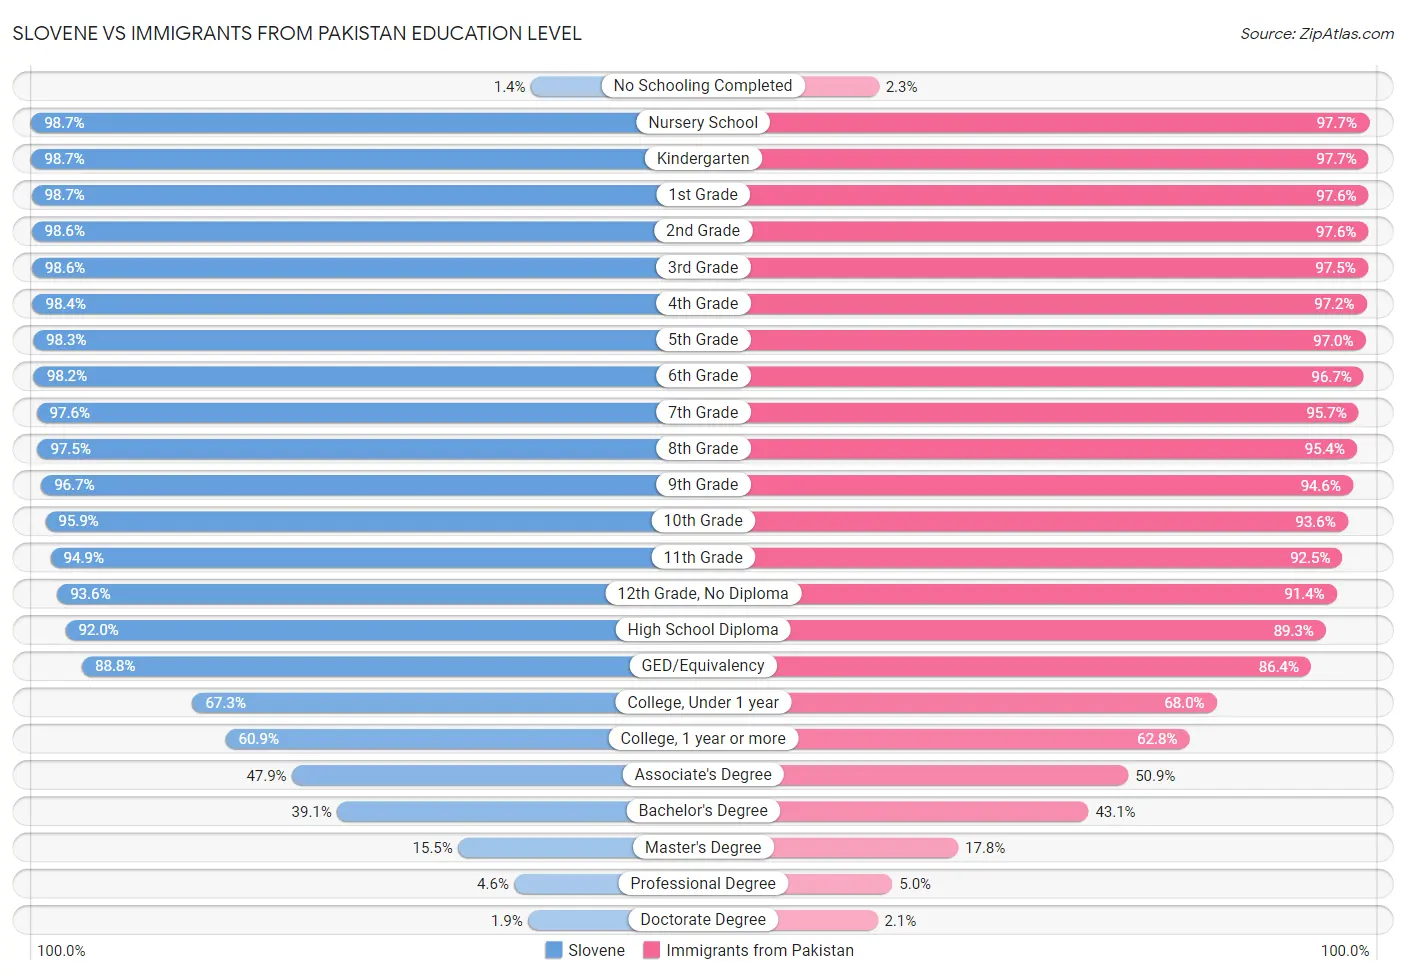 Slovene vs Immigrants from Pakistan Education Level